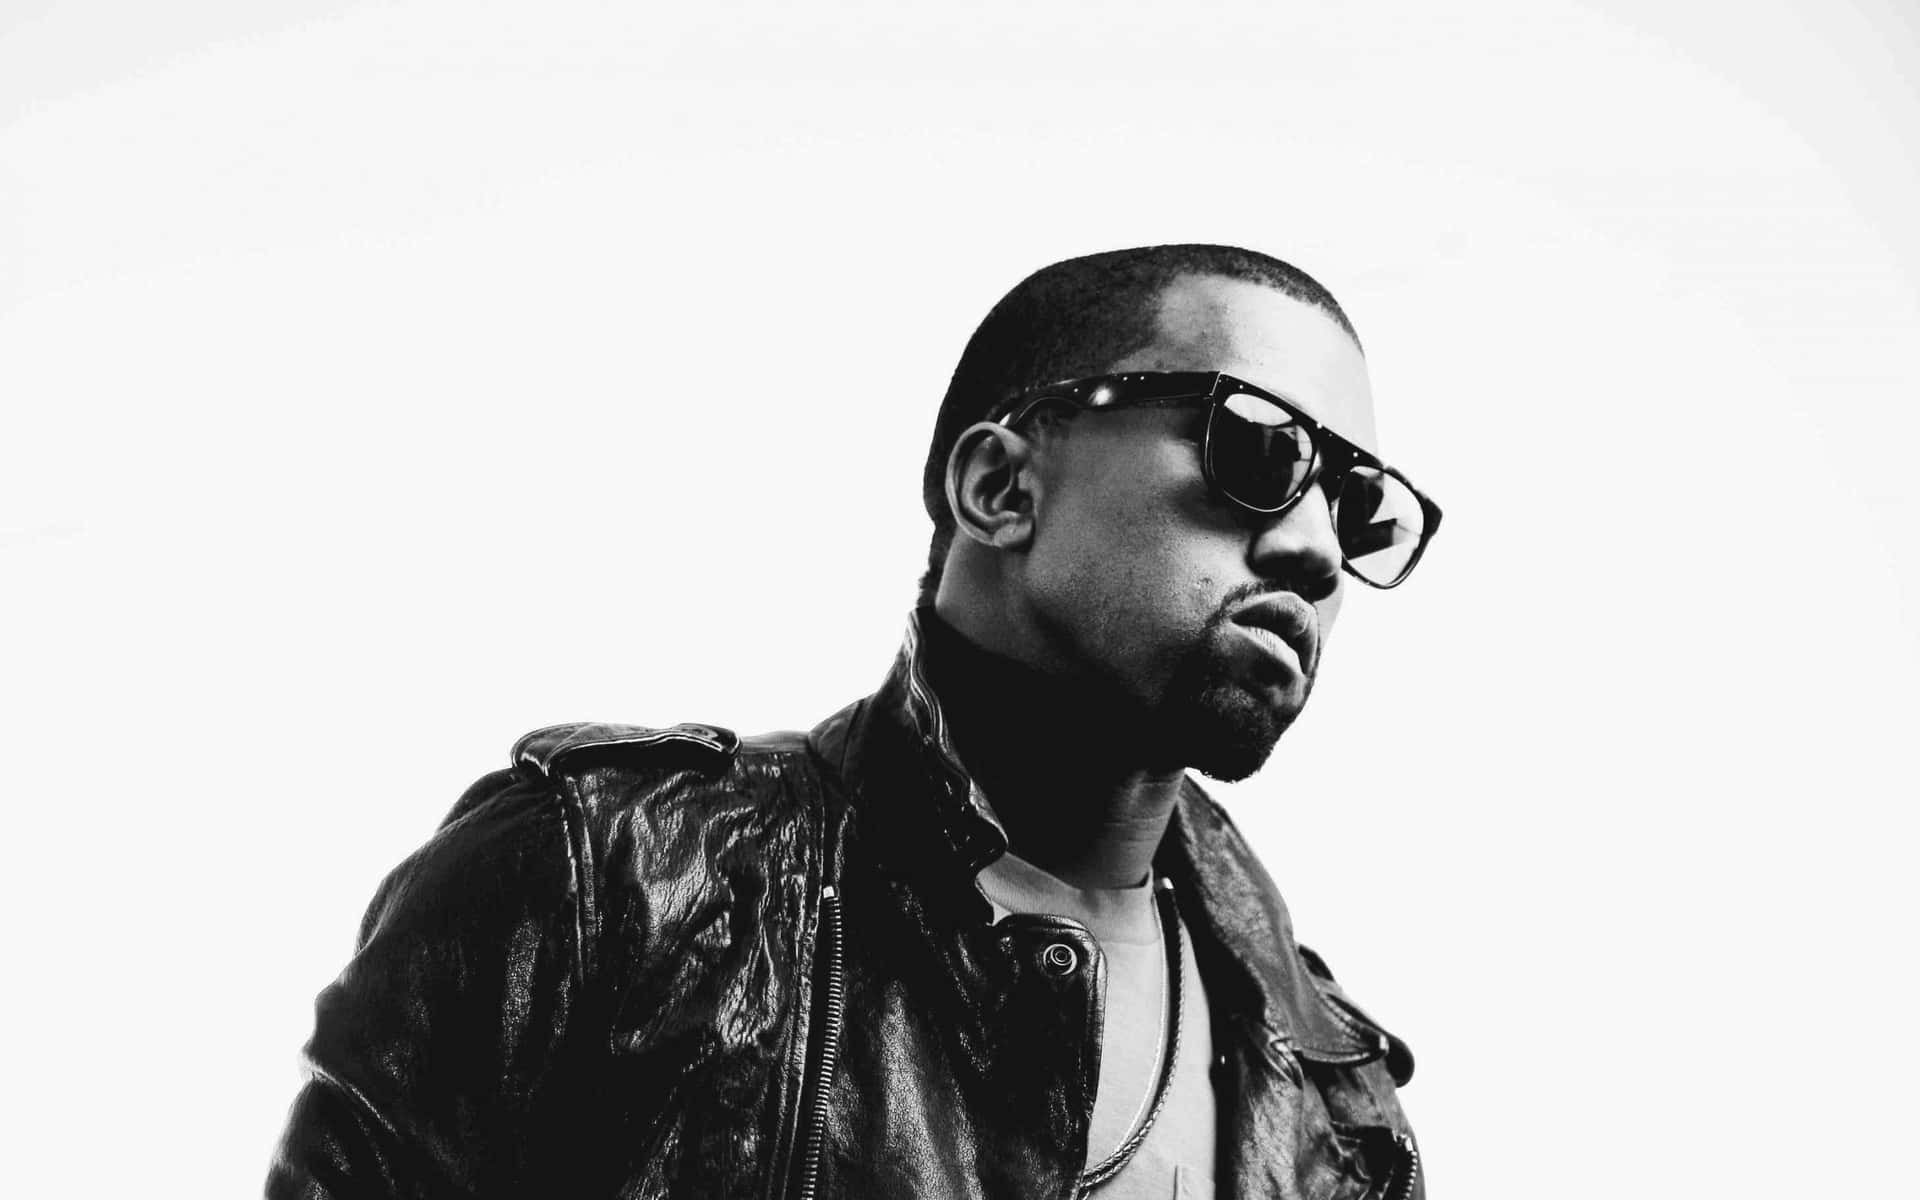 Yeezysäsongen: En Titt In I Den Kreativa Sinnet Hos Kanye West